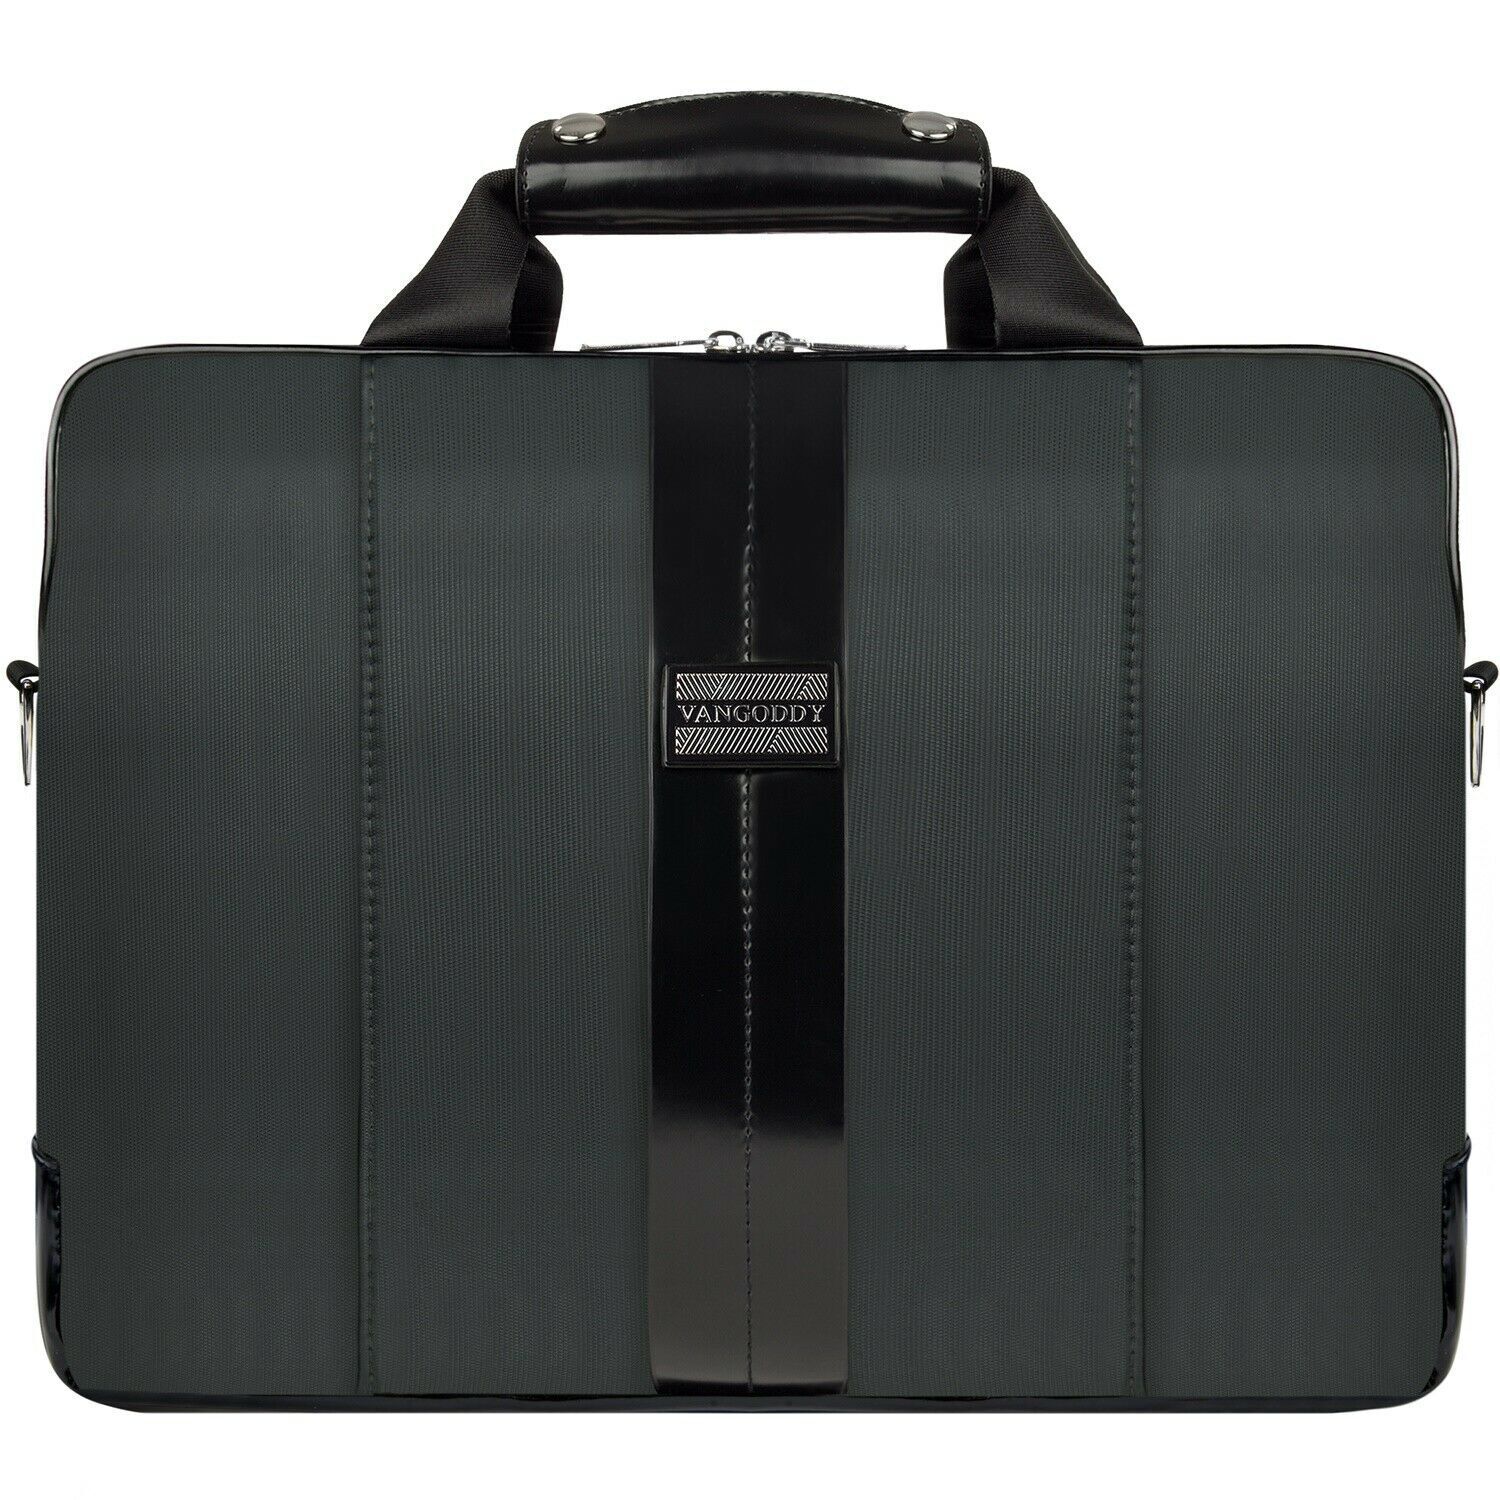 VanGoddy Laptop Bag Travel Briefcase For 15